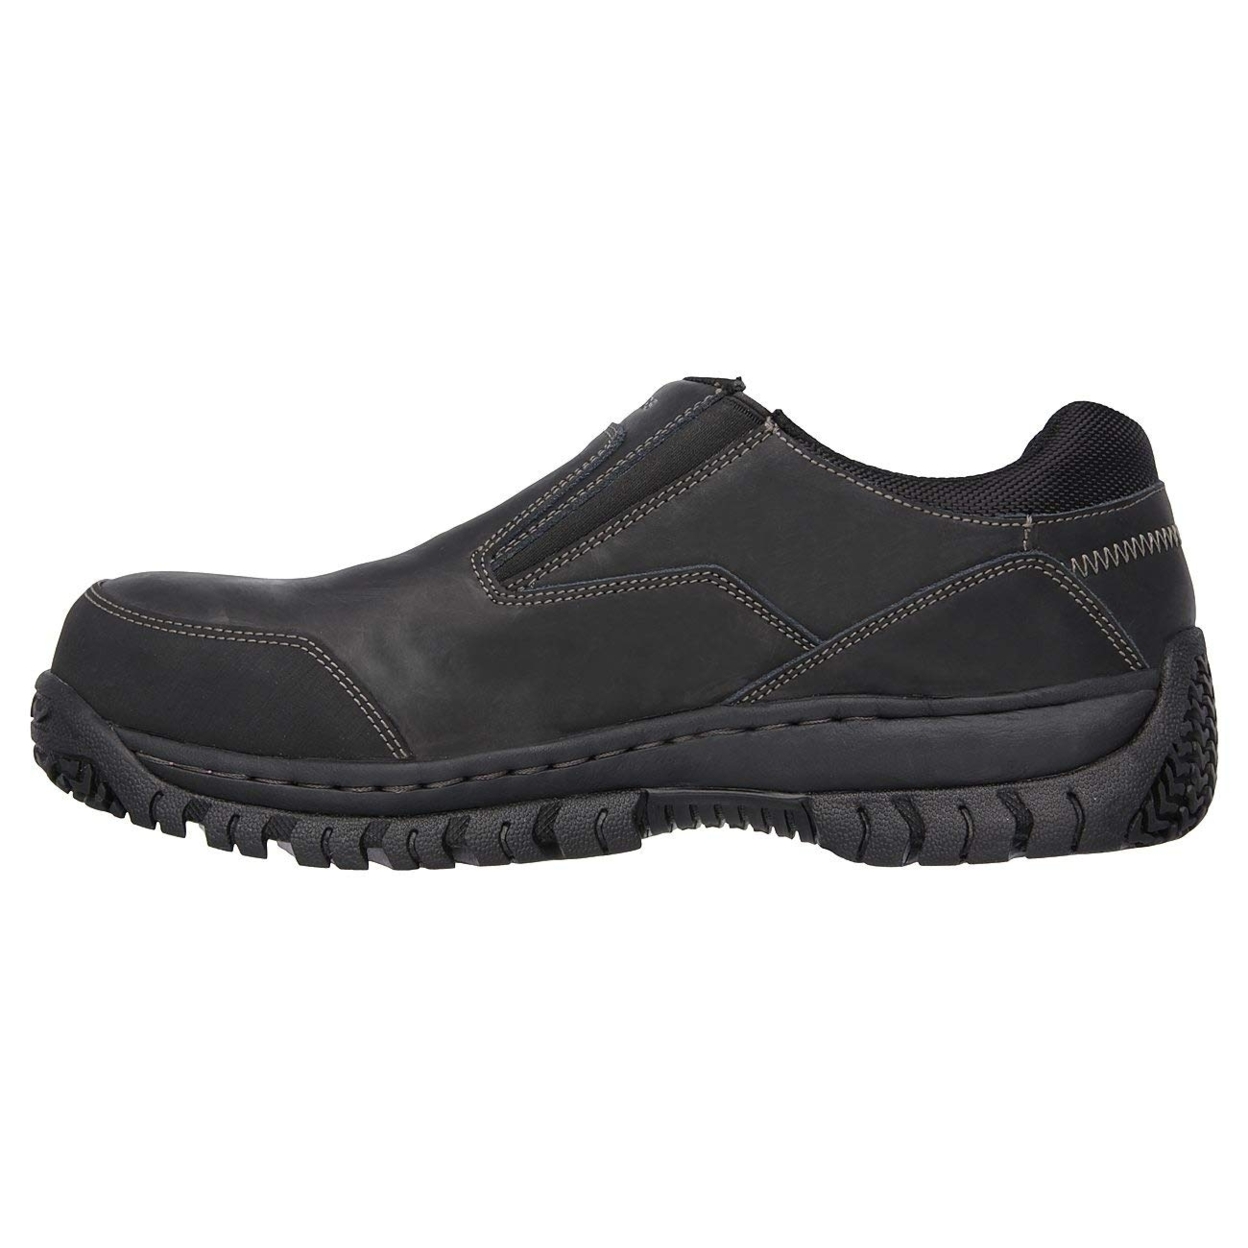 Skechers For Work Men's Hartan Steel Toe Slip-On Shoe Varies BLACK - BLACK, 7